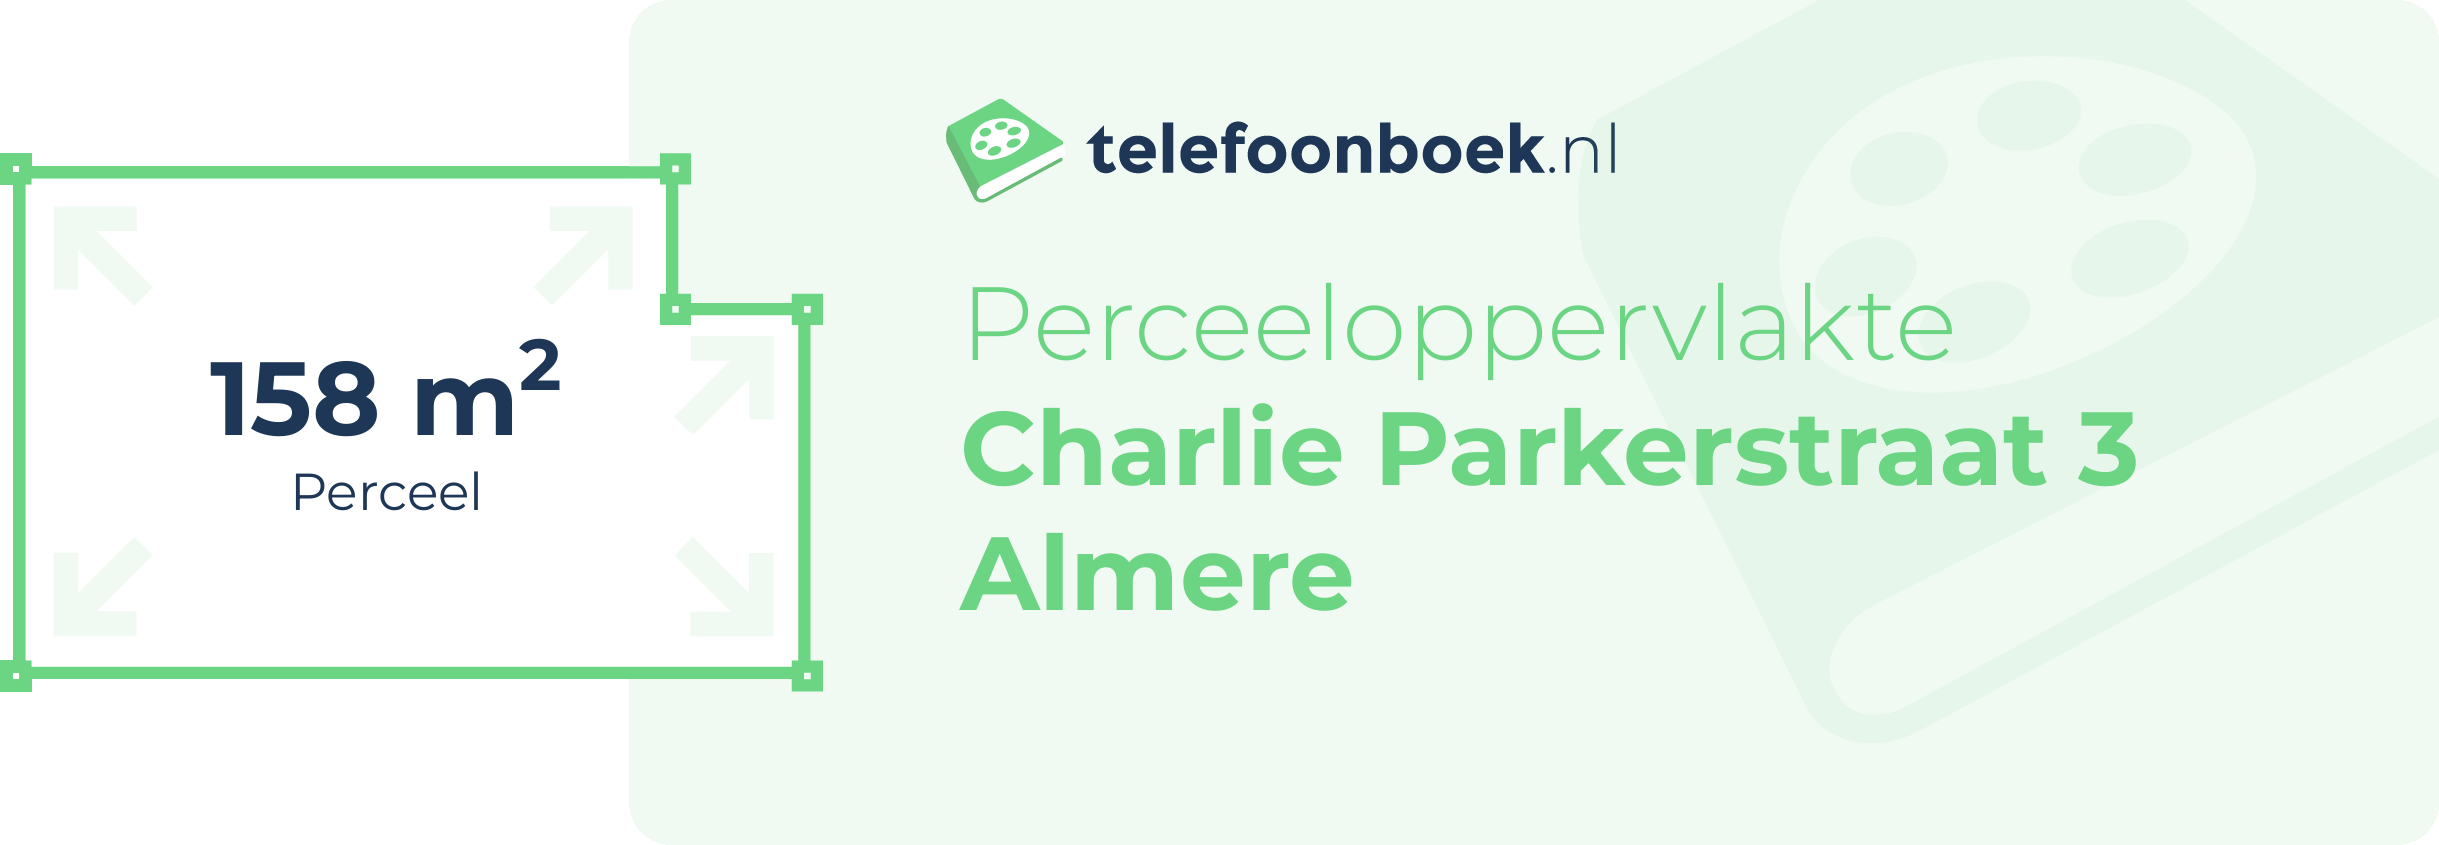 Perceeloppervlakte Charlie Parkerstraat 3 Almere